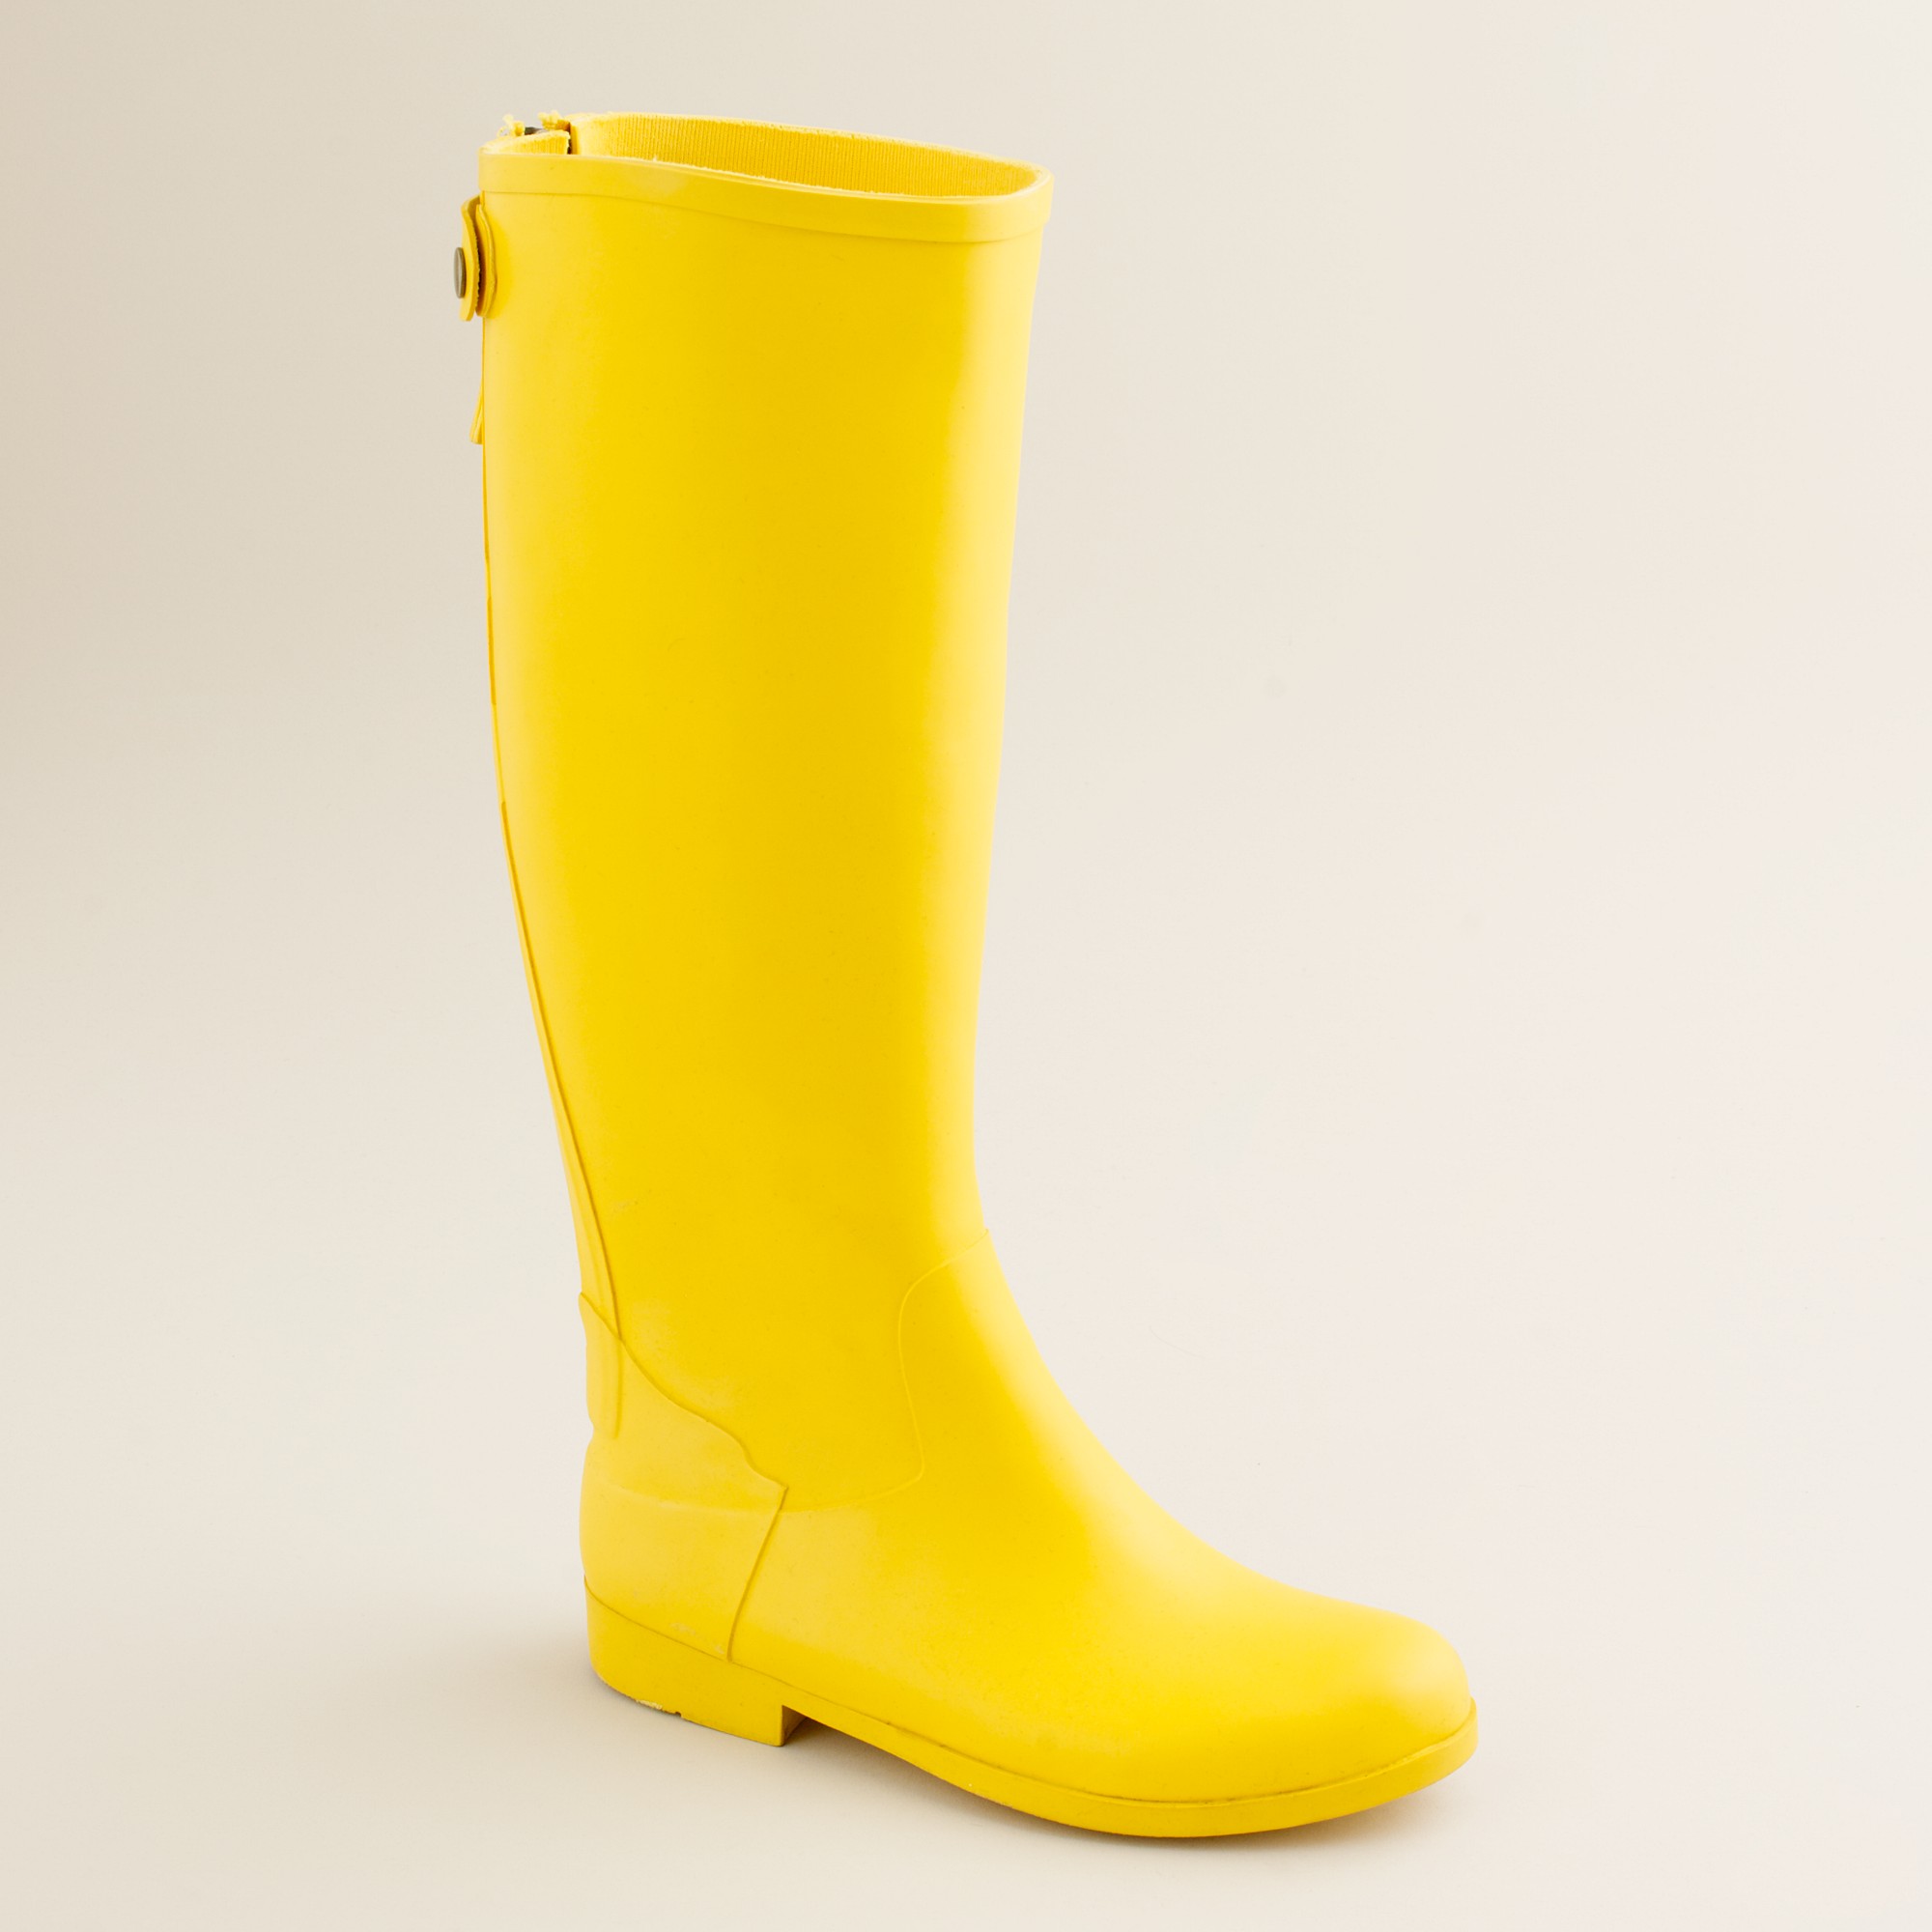 J.crew Weatherby Rain Boots in Yellow (warm mustard) | Lyst